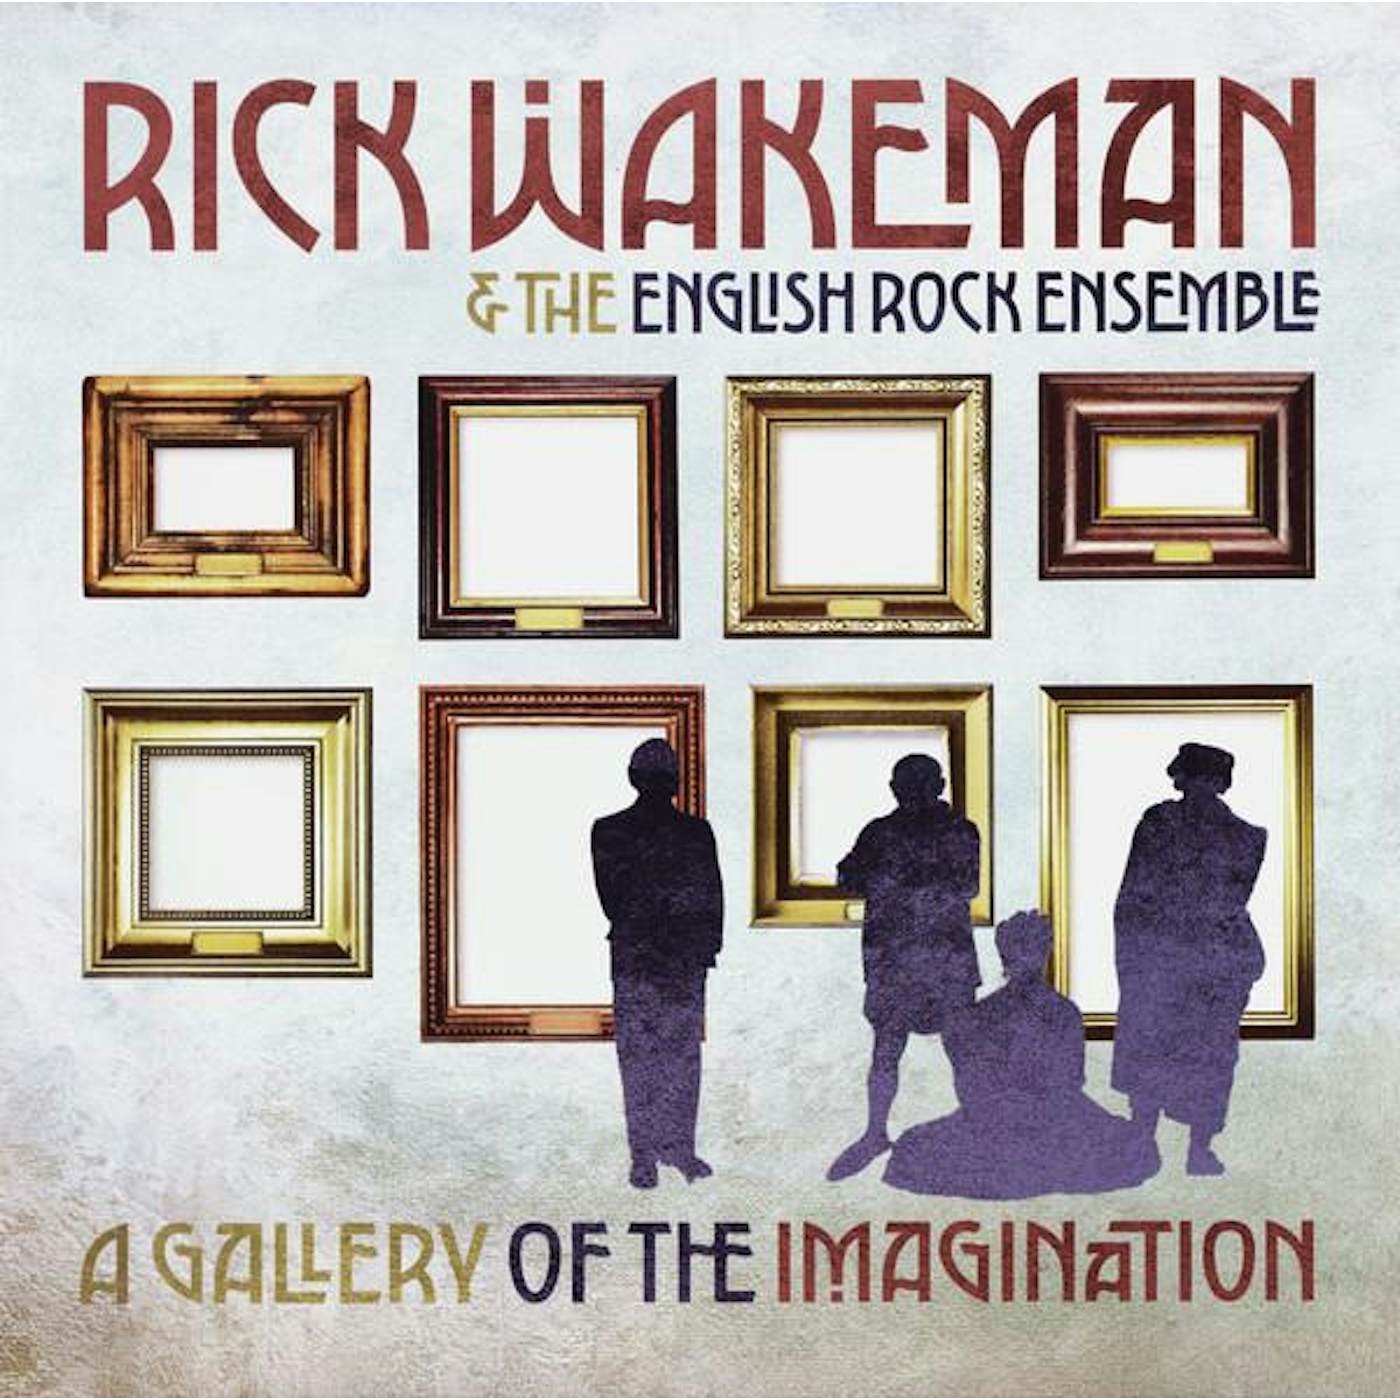 Rick Wakeman GALLERY OF THE IMAGINATION (2LP) Vinyl Record